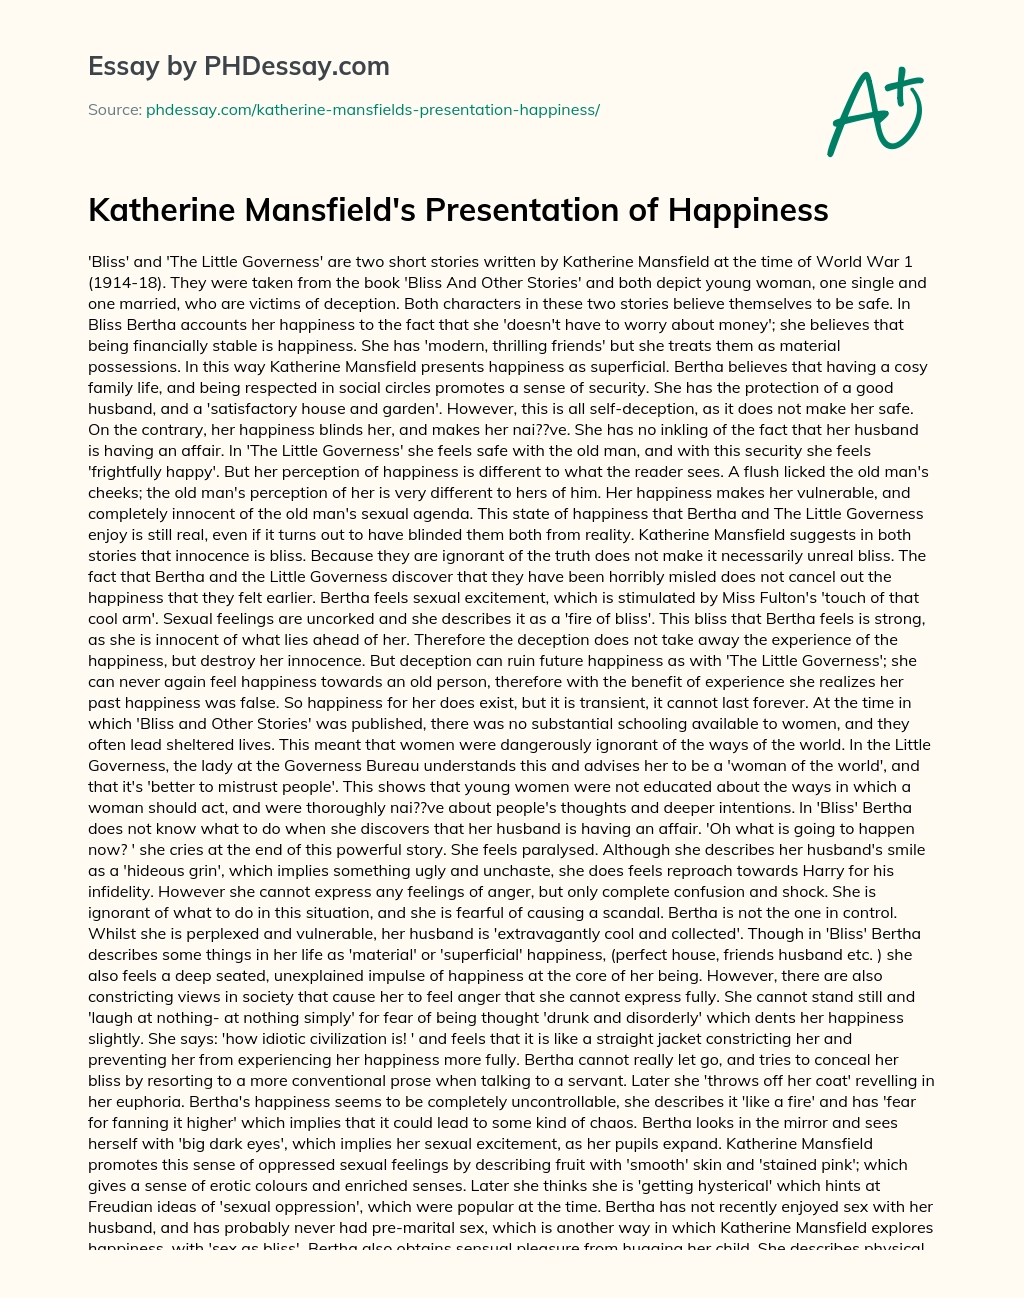 Katherine Mansfield’s Presentation of Happiness essay